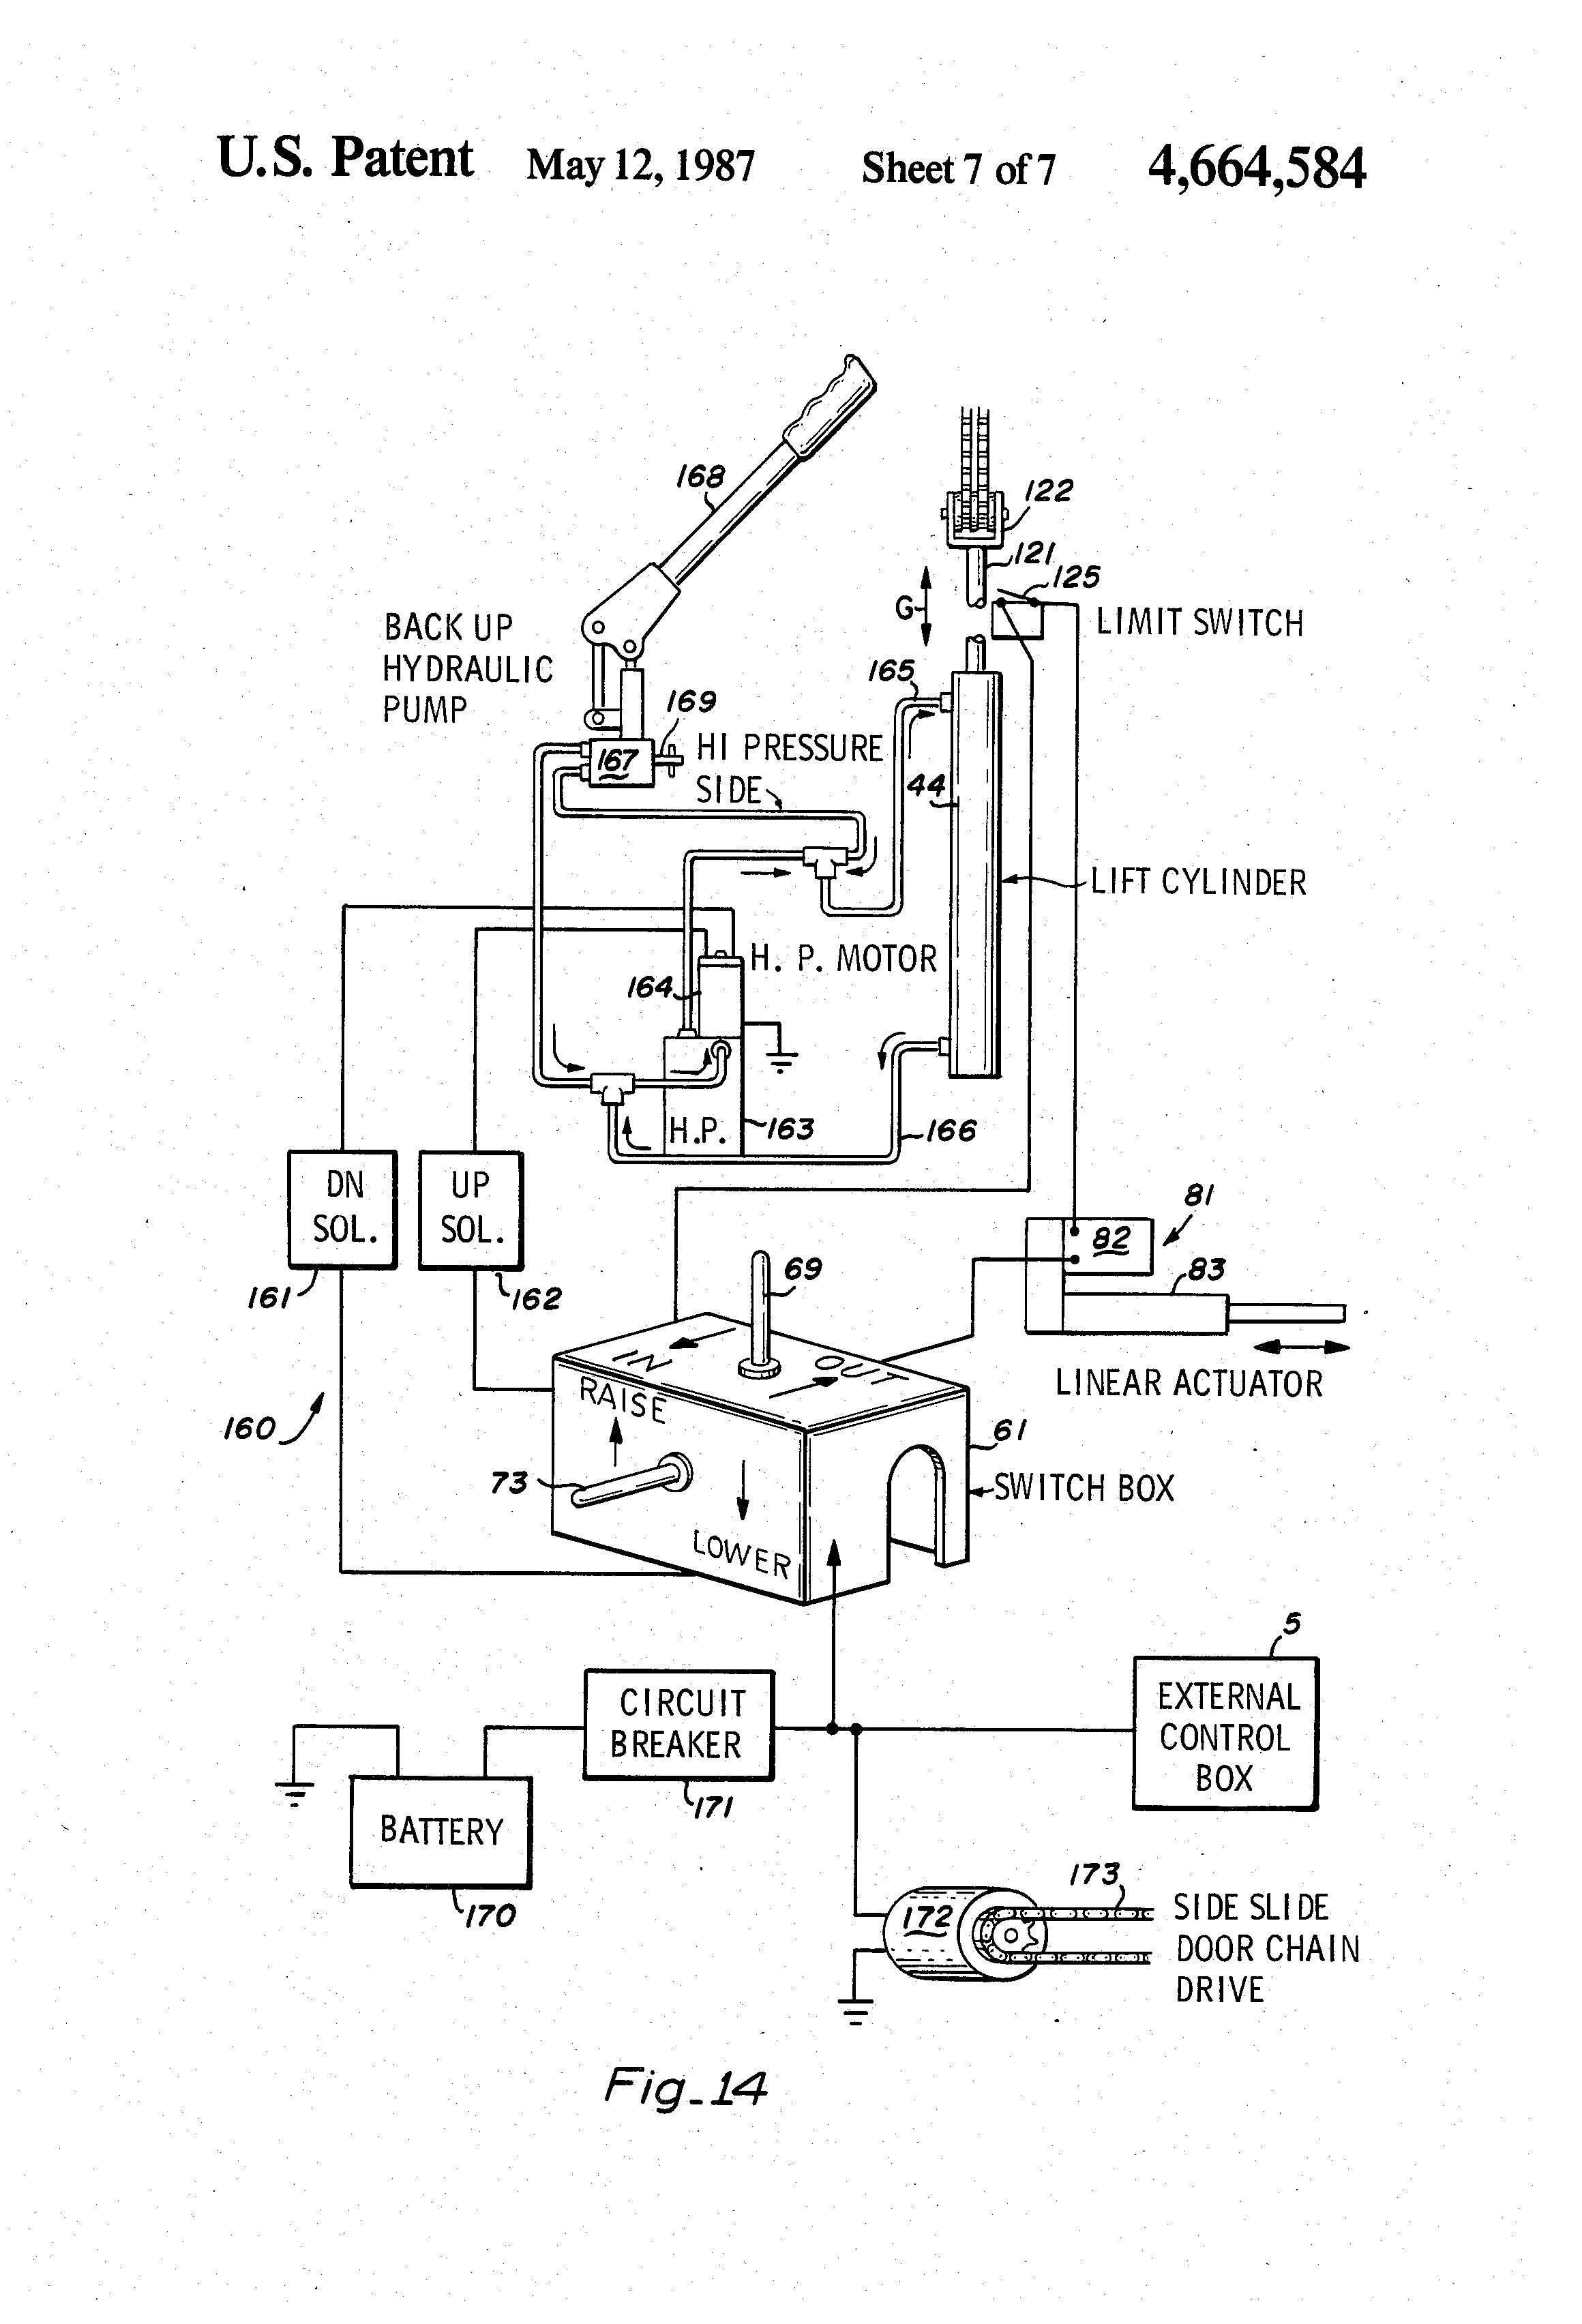 Jlg Scissor Lift Wiring Diagram Lift Electrical Wiring Diagram Of Jlg Scissor Lift Wiring Diagram